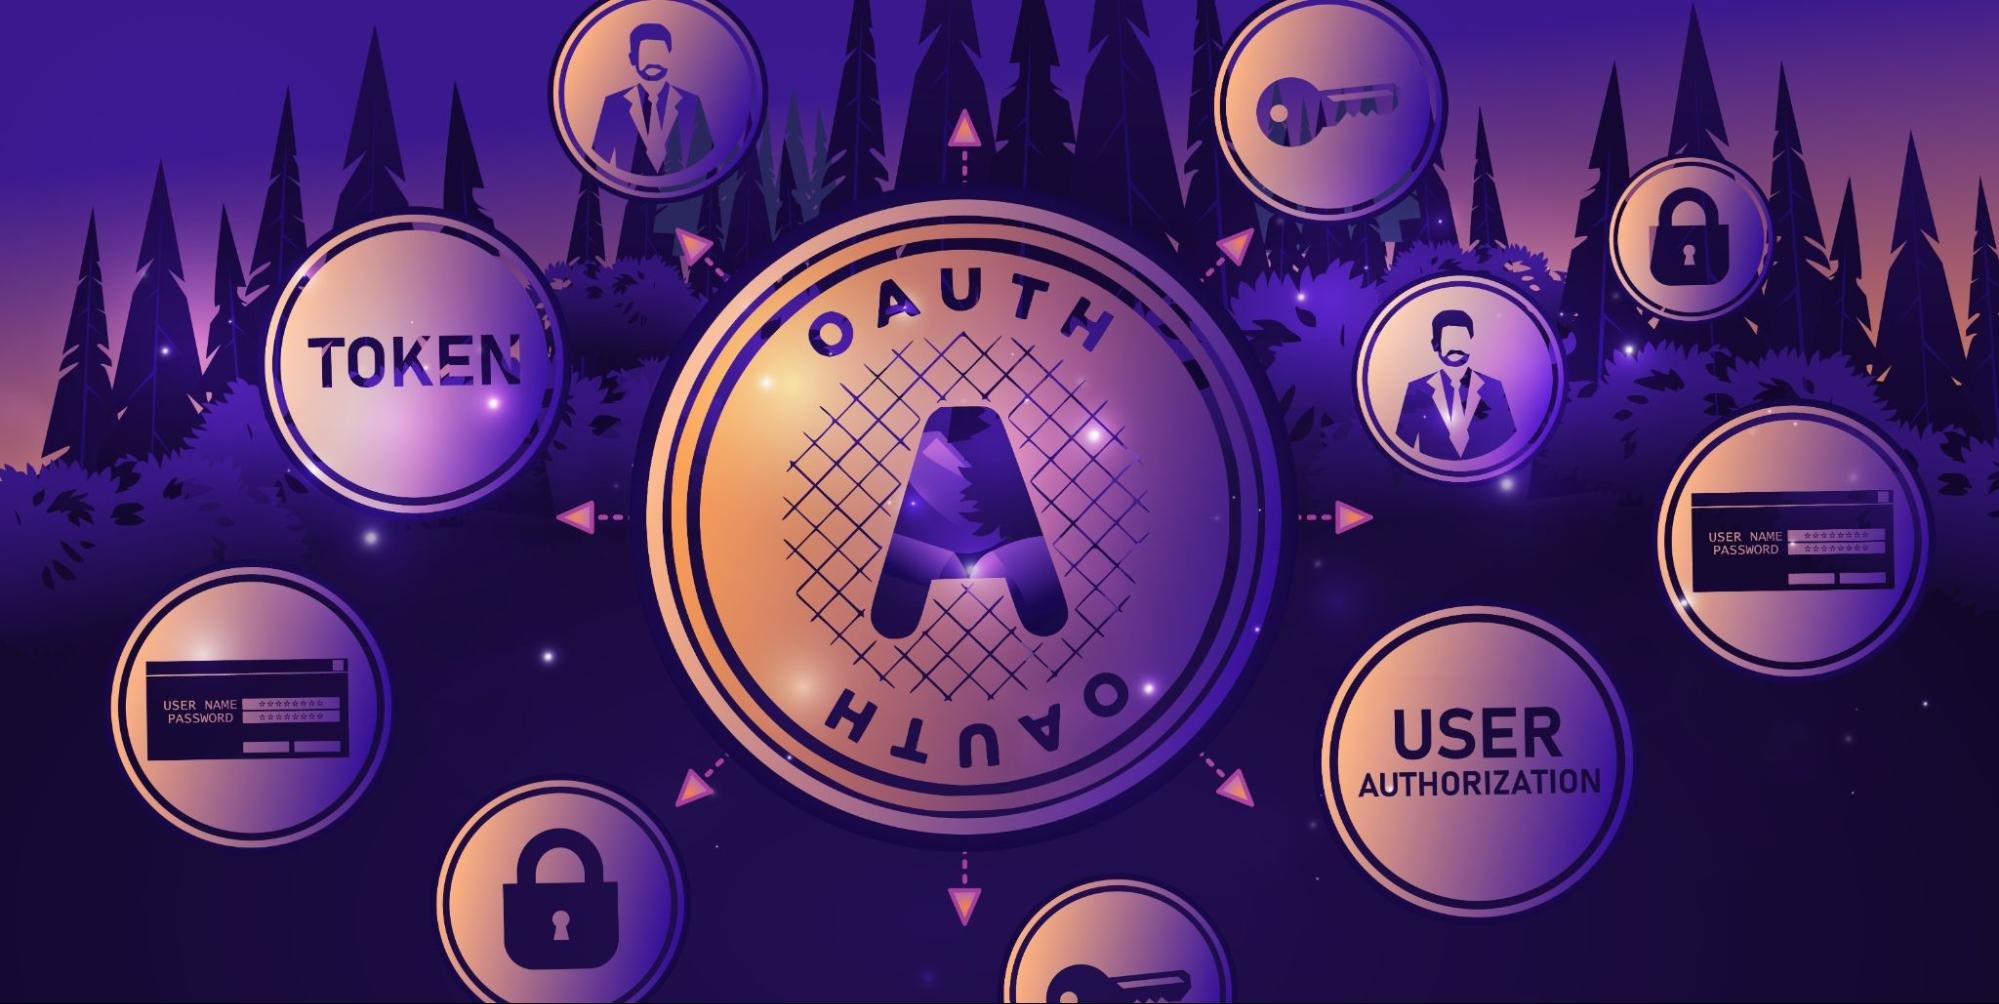 The OAuth logo - Destination Certification